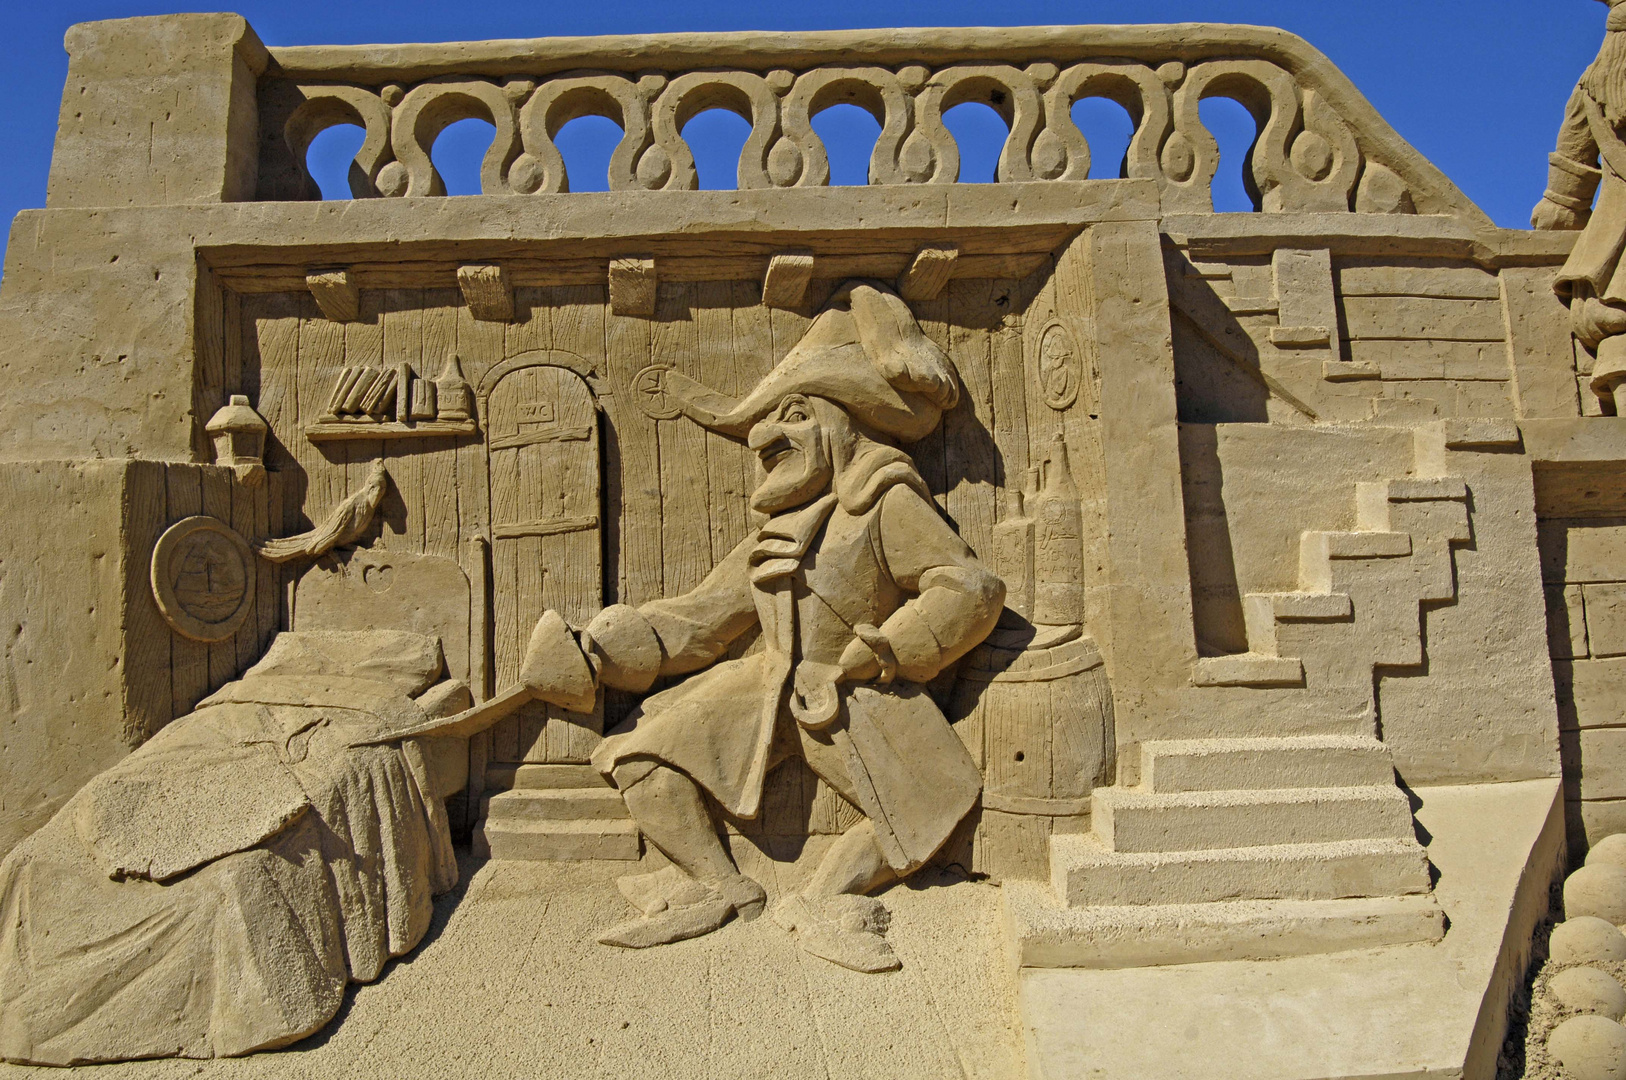 Sandskulptur